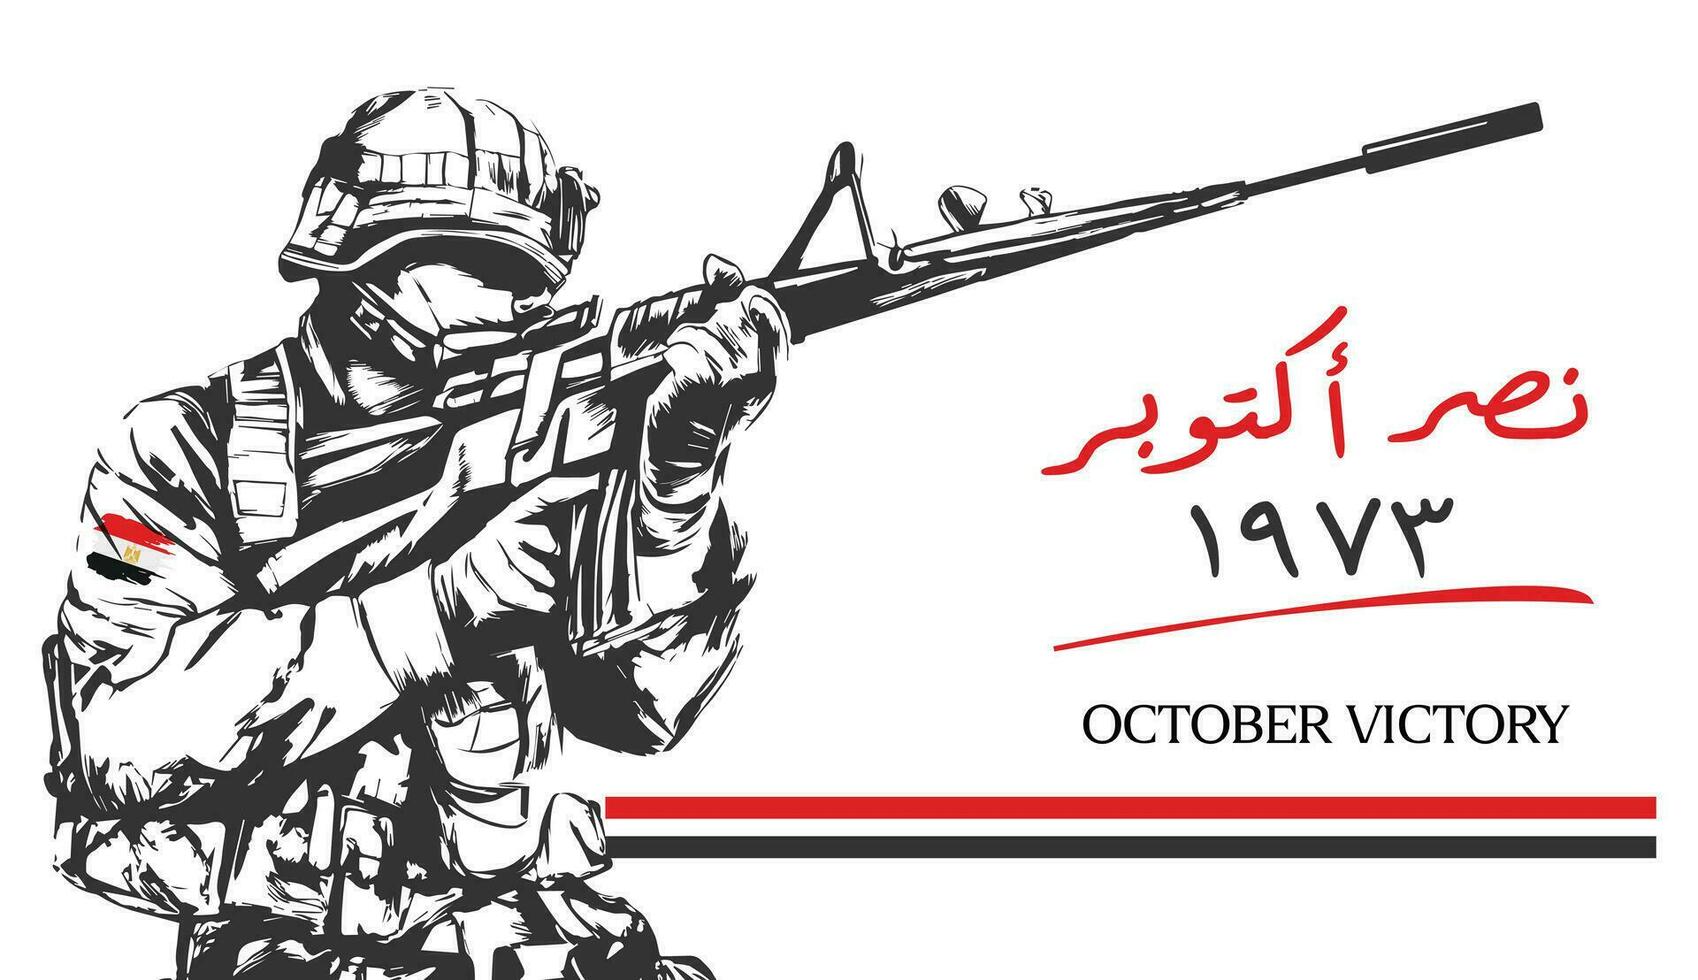 Oktober Sieg im Arabisch Sprache Illustration zum Krieg Soldat 1973 Illustration ägyptisch Oktober Sieg Stolz vektor